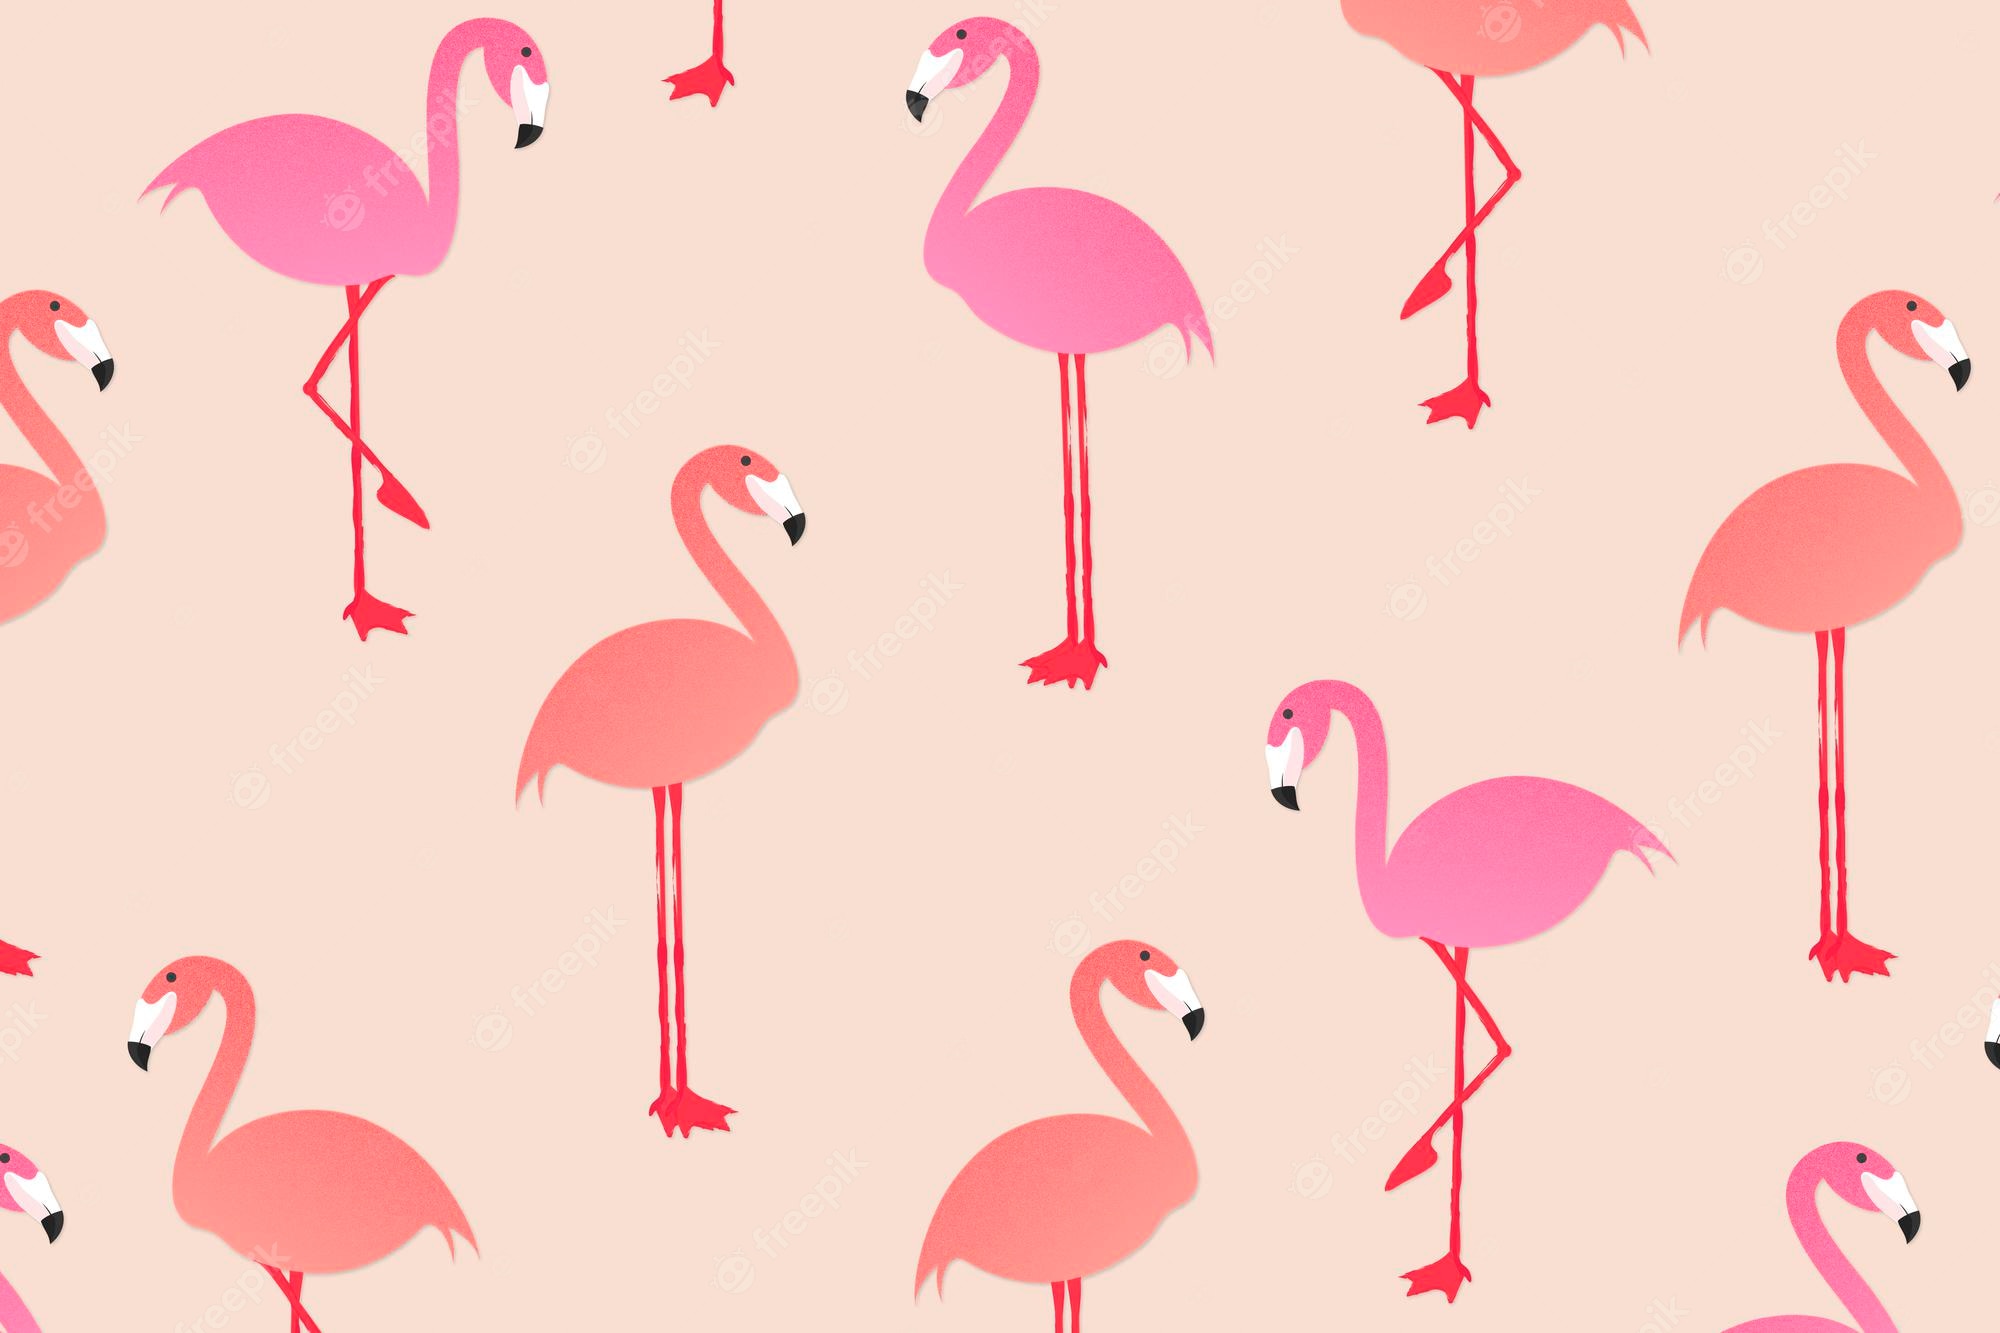 Free Vector. Summer animal pattern background wallpaper, flamingo vector illustration